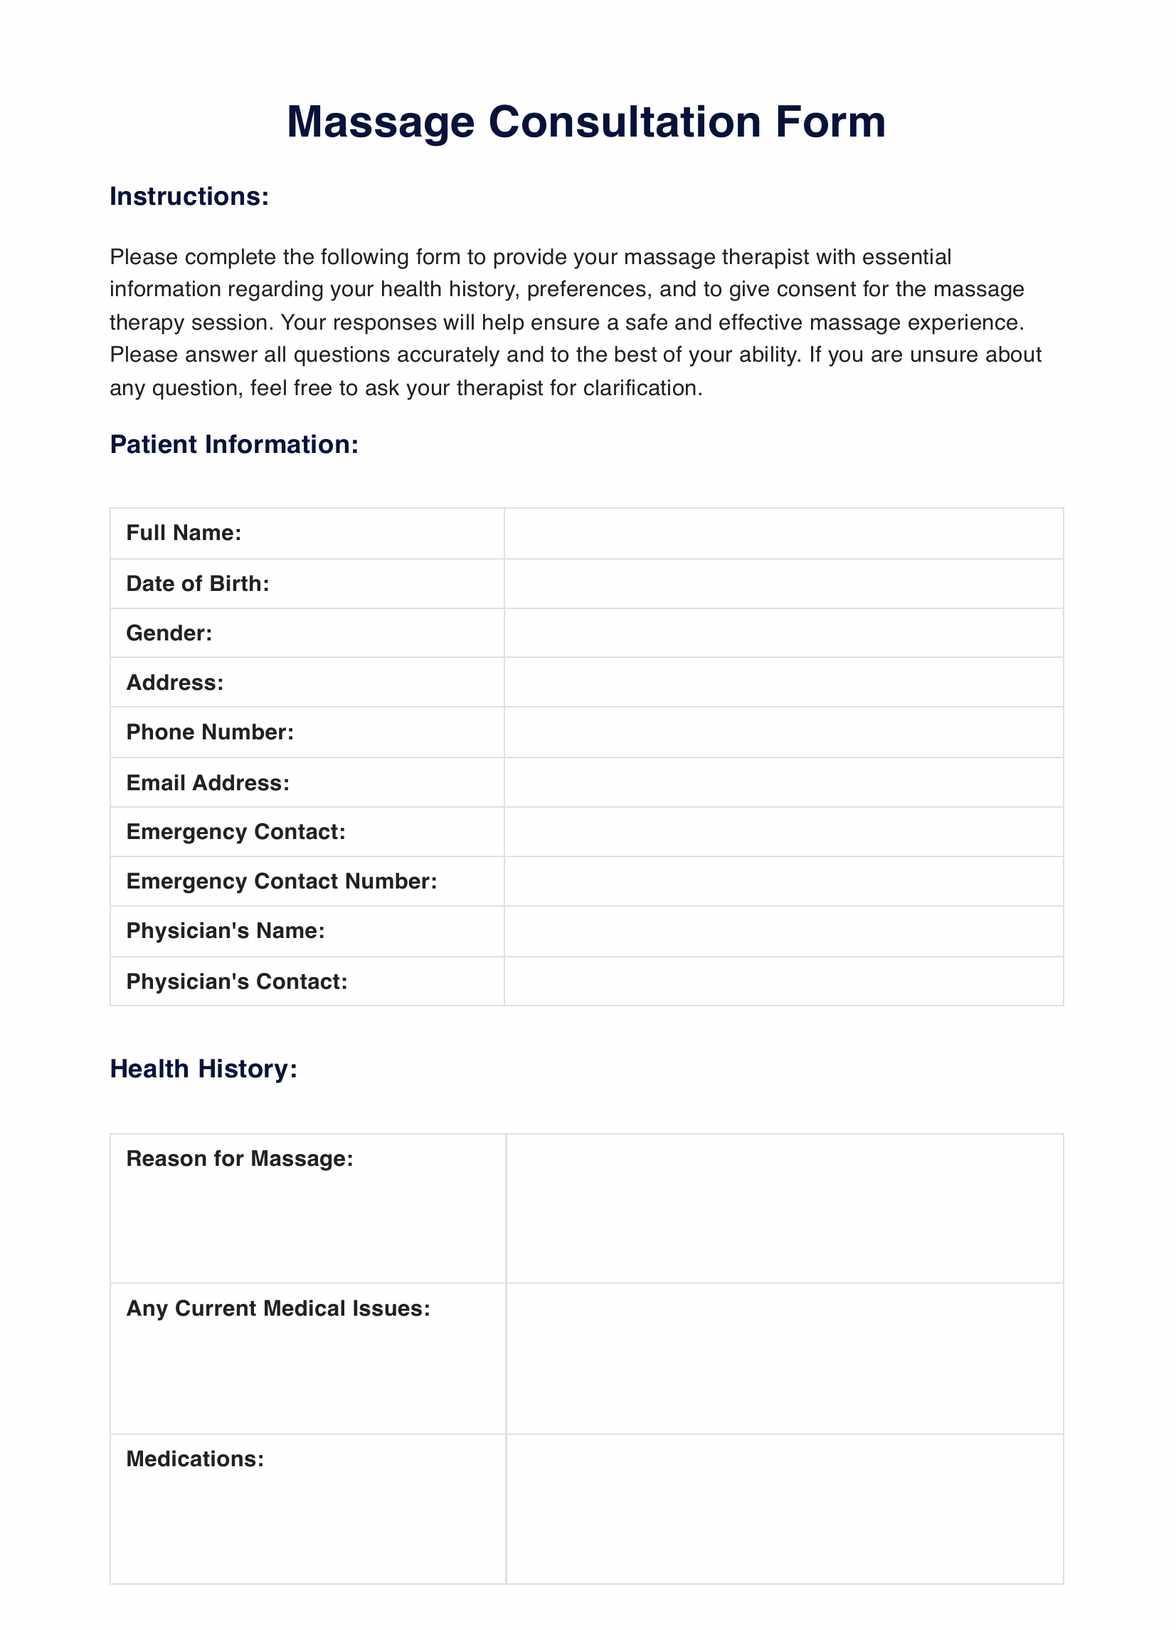 Massage Consultation Form PDF Example